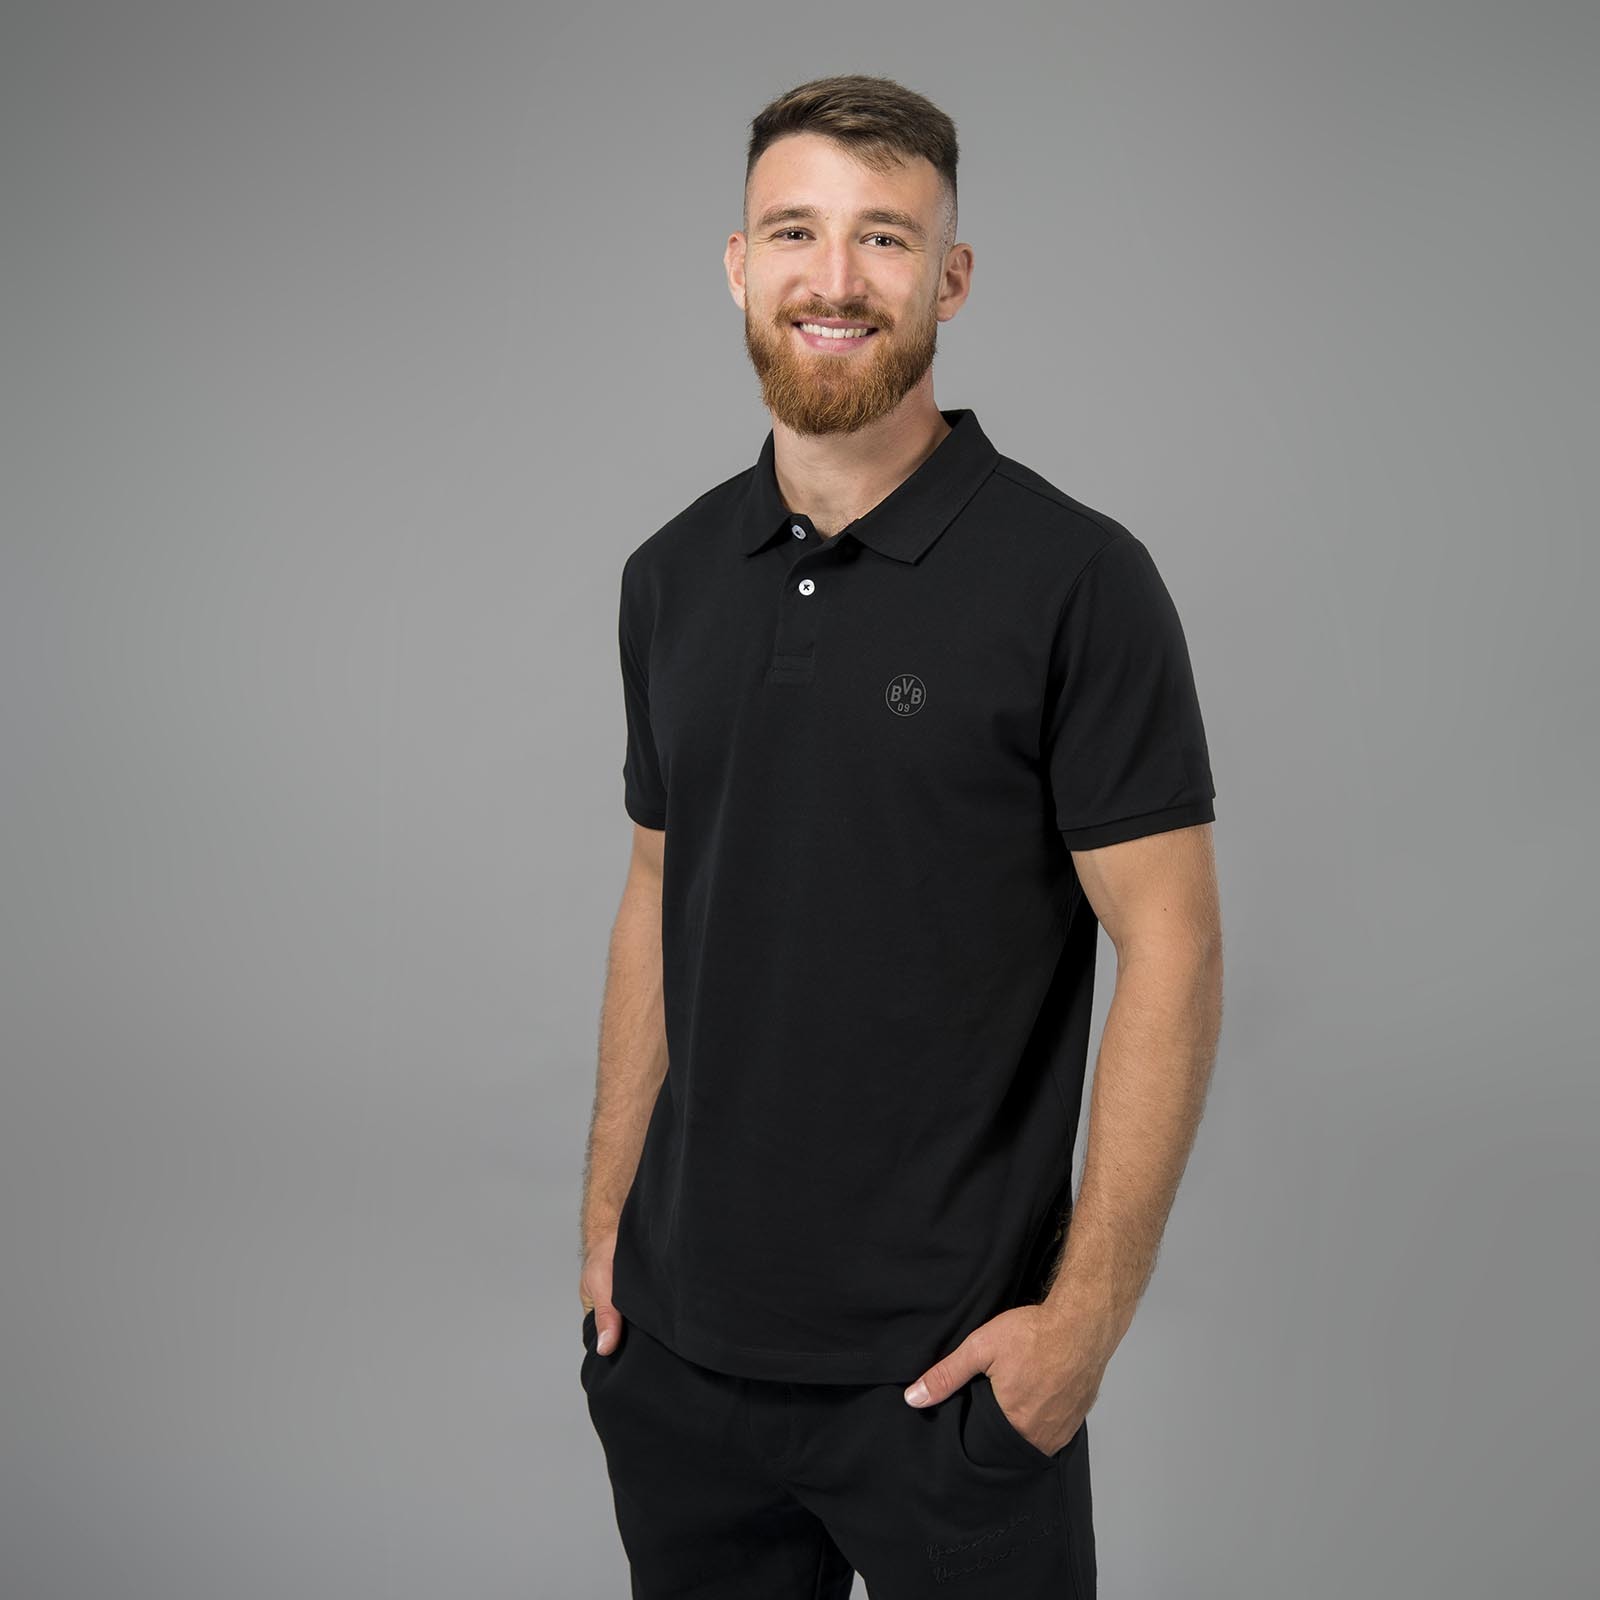 BVB Polo Shirt Essential black | Men | Apparel | BVB Onlineshop